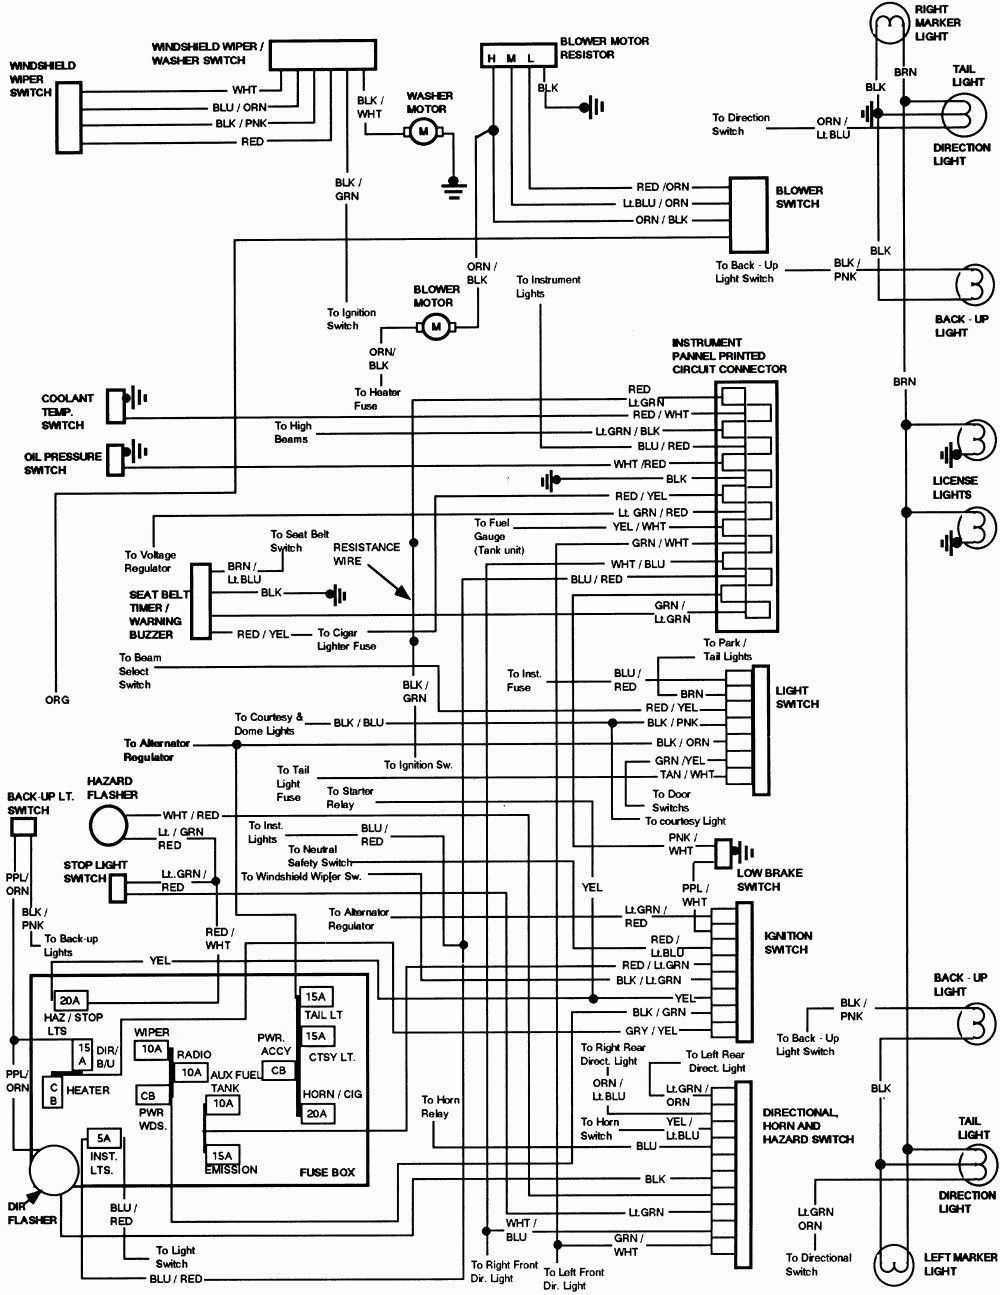 1999 Ford F150 Fuse Diagram Wiring Diagram 1981 Ford F 150 Wiring Diagram Directory